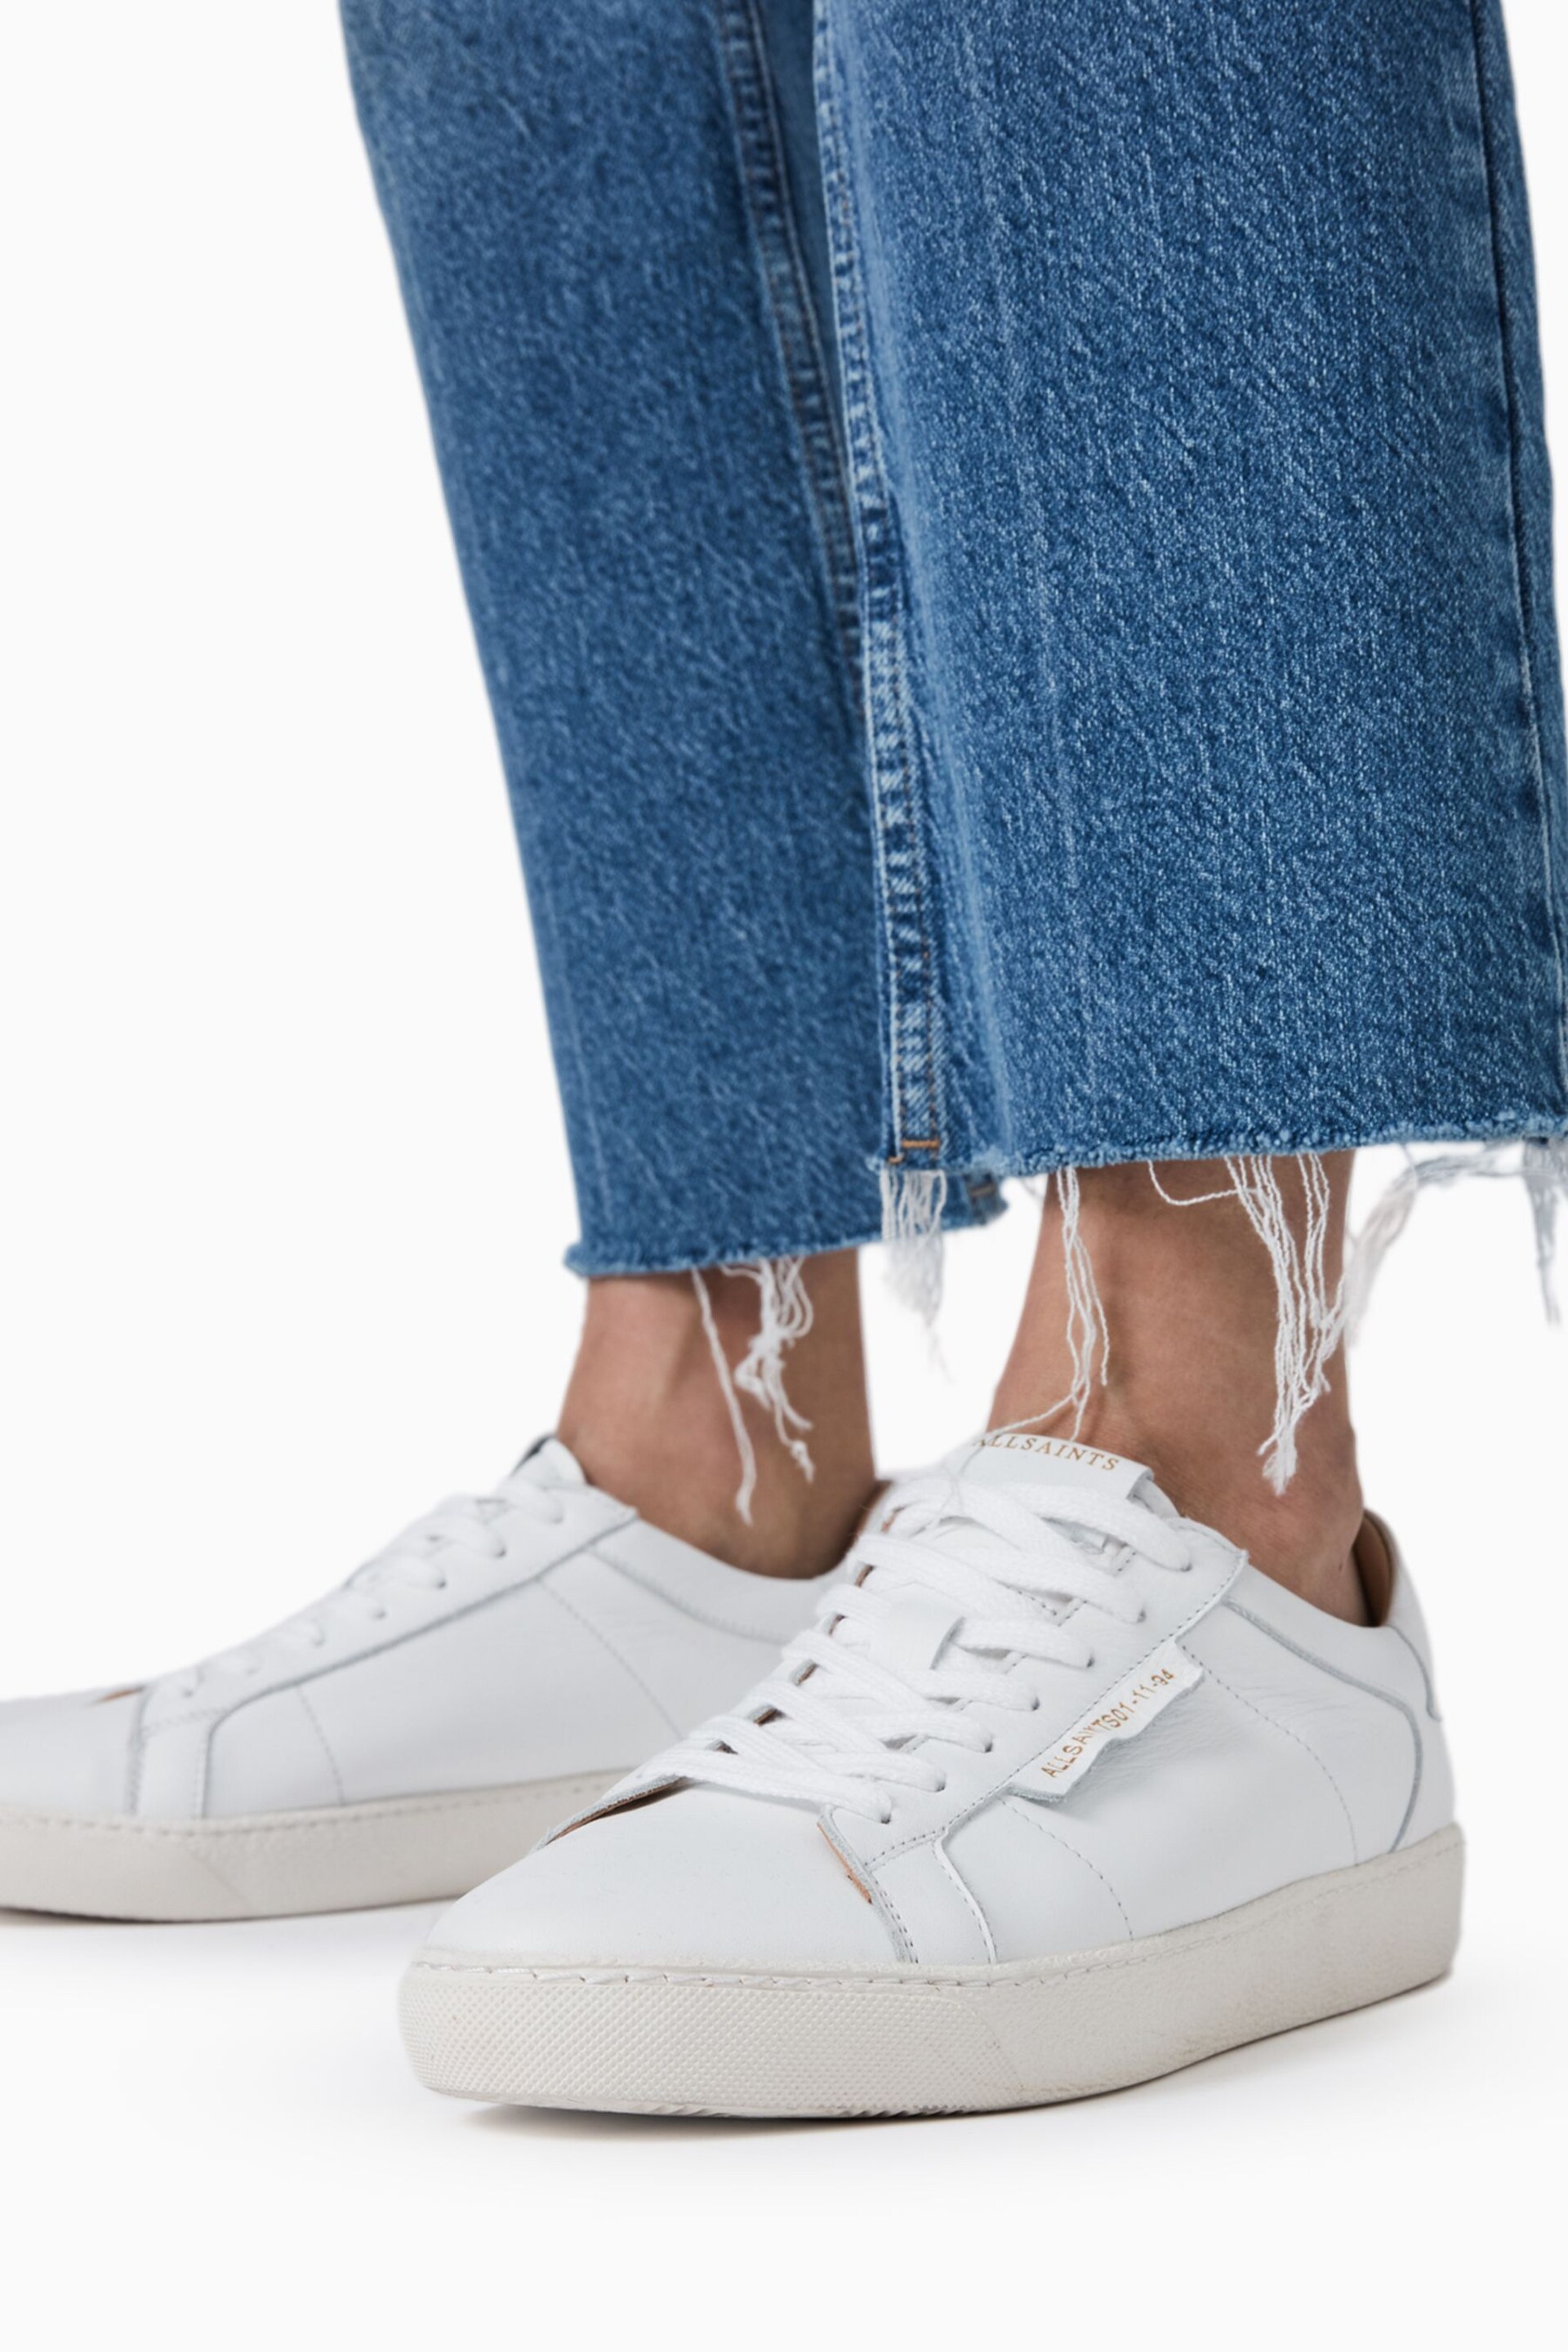 AllSaints White Sheer Sneakers - Image 6 of 7